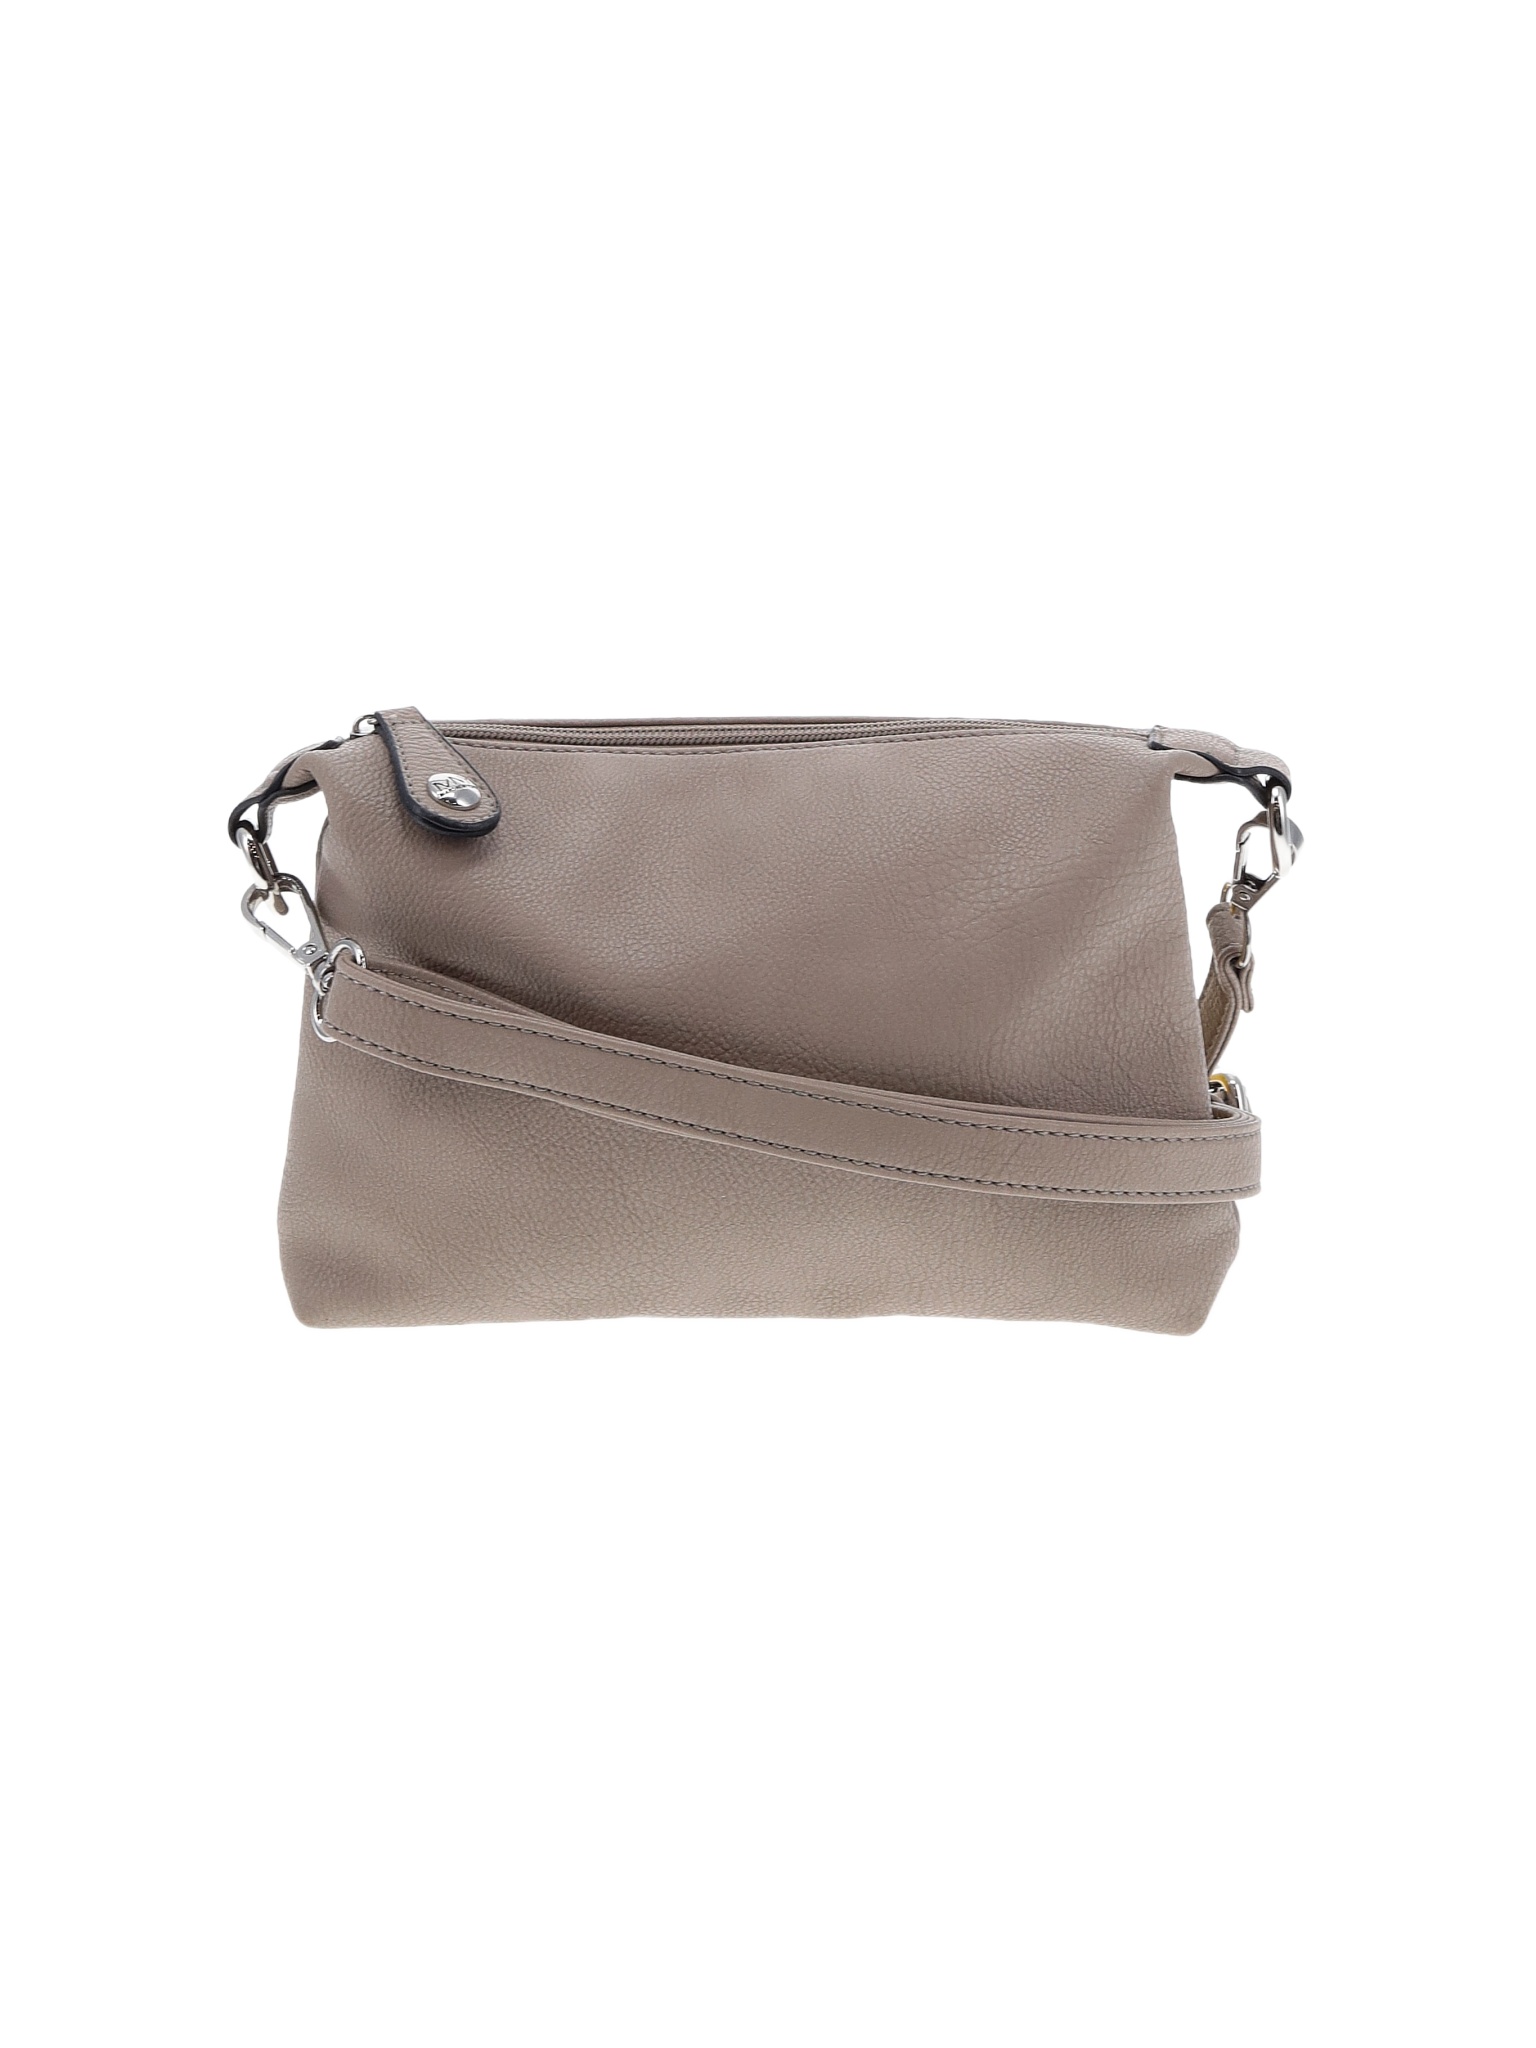 Marc New York Solid Gray Tan Crossbody Bag One Size - 76% off | thredUP